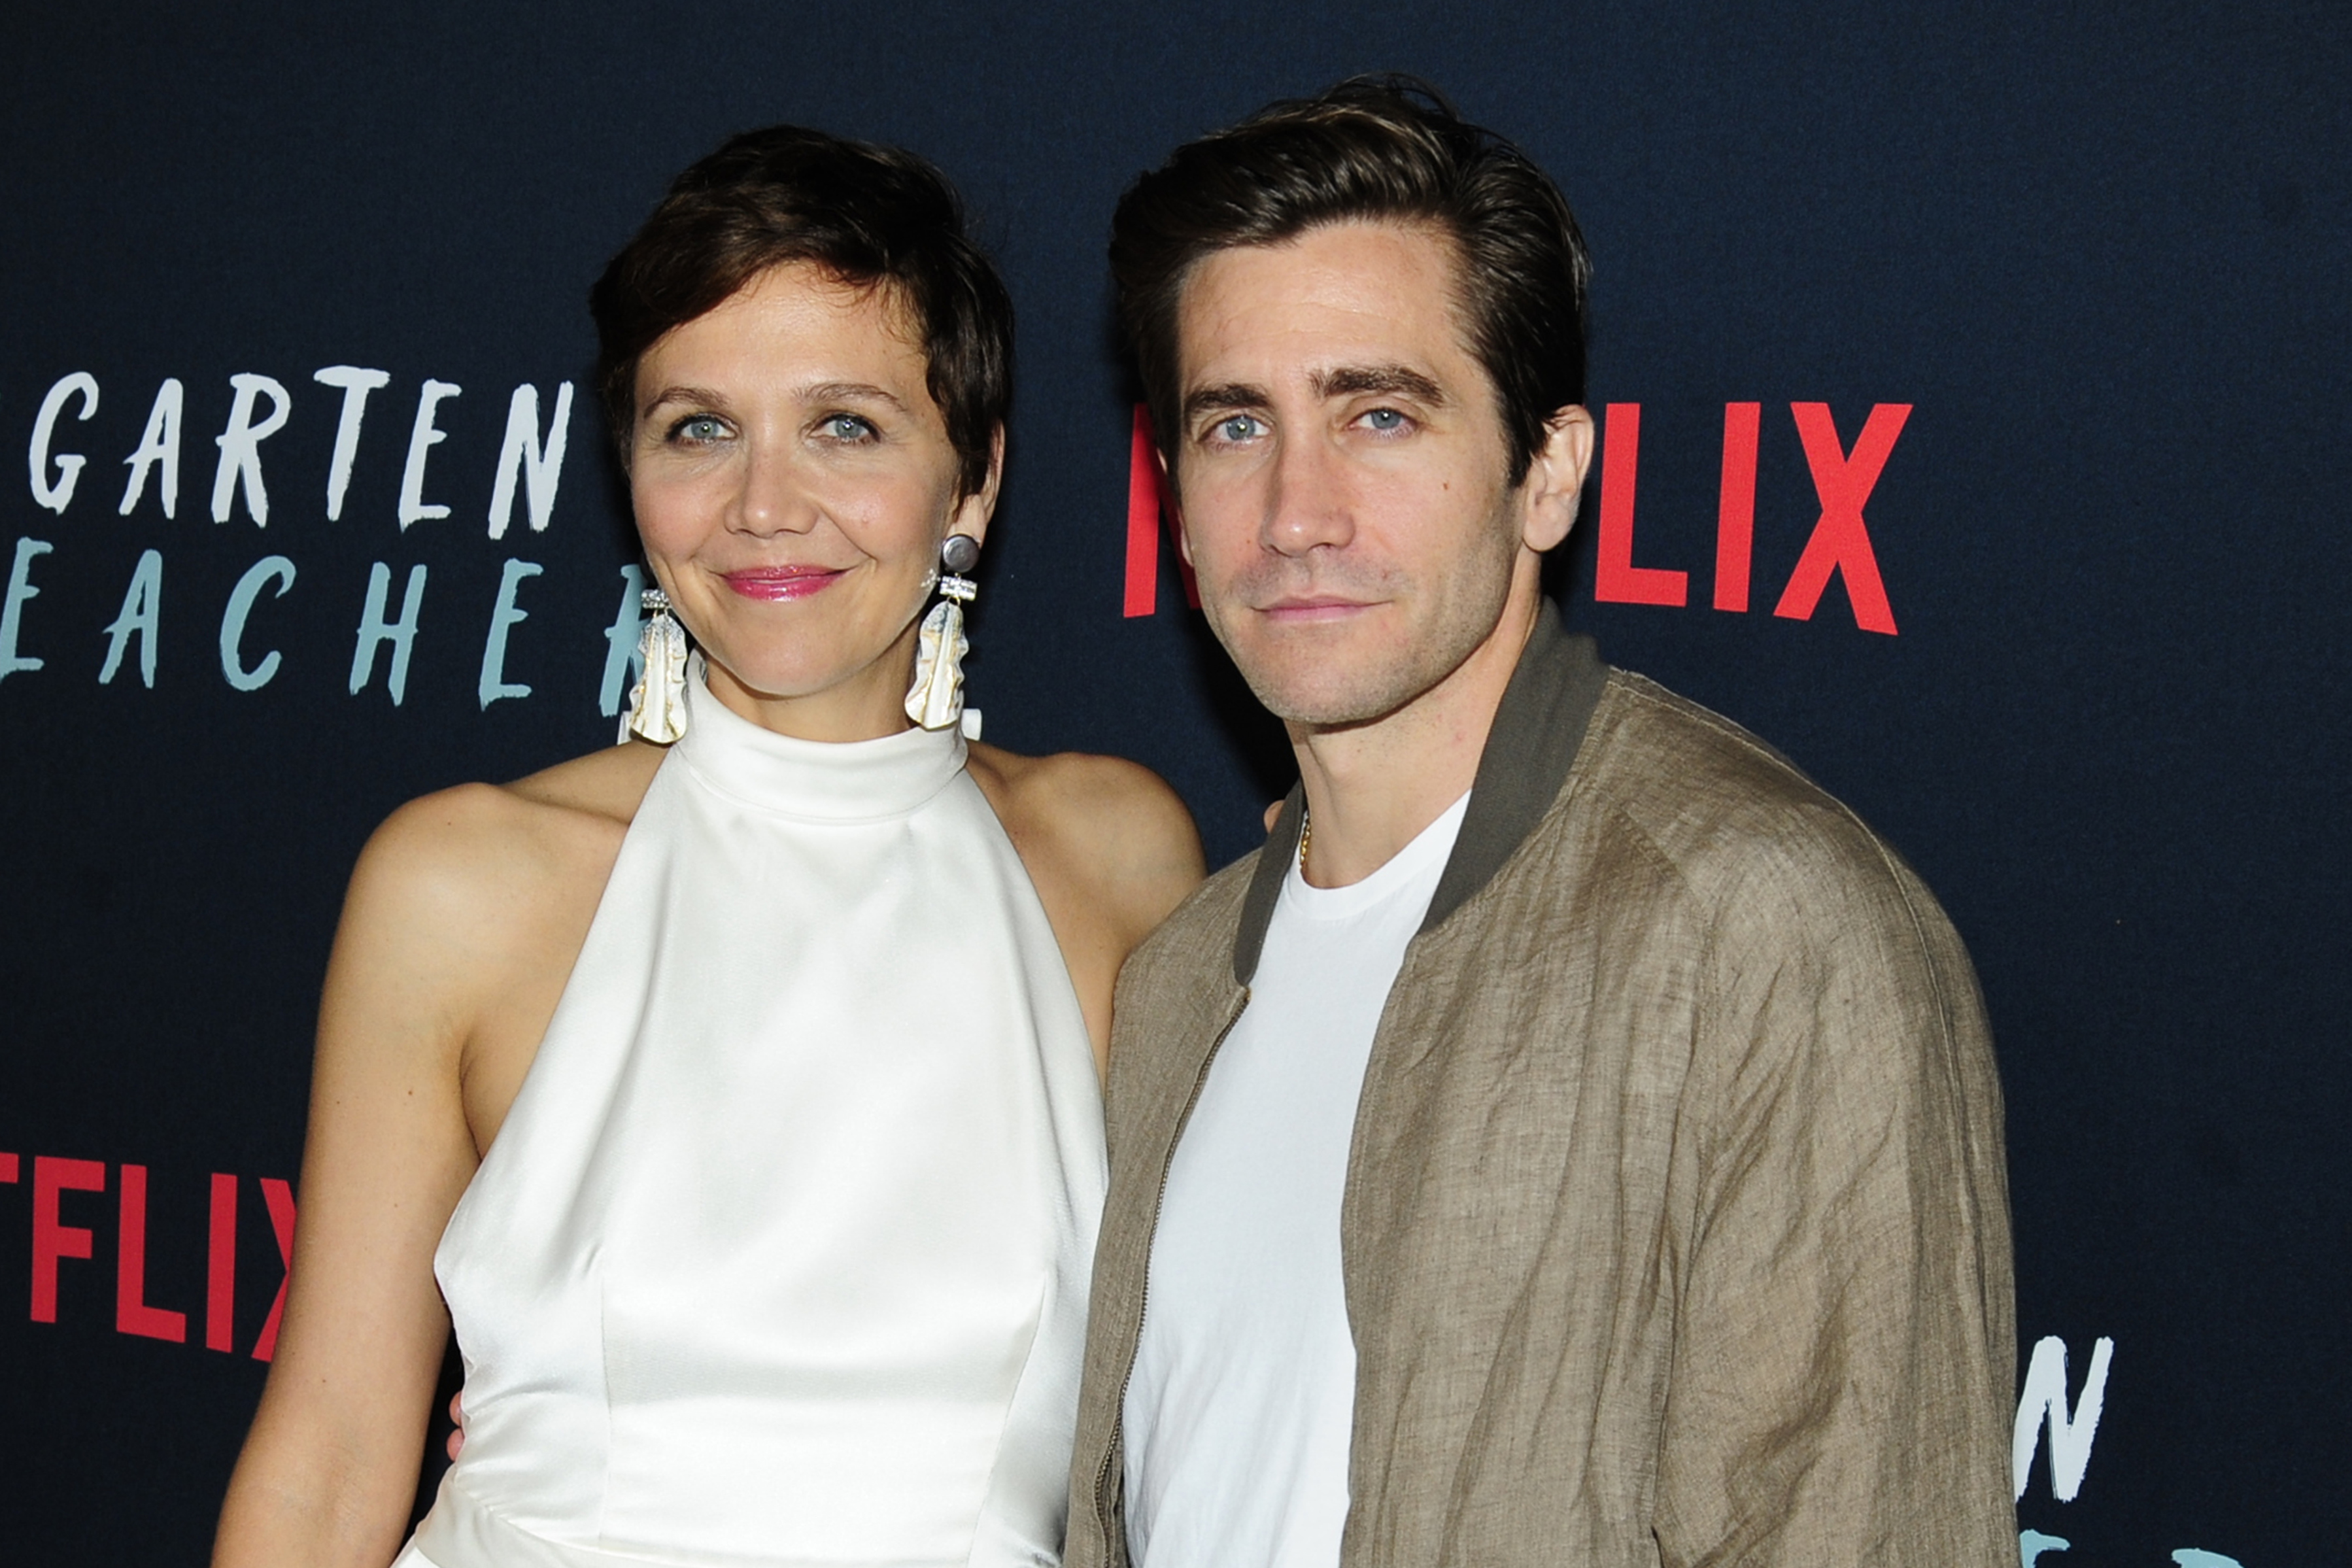 Siblings Maggie Gyllenhaal and Jake Gyllenhaal pose together on red carpet ahead of special Netflix screening